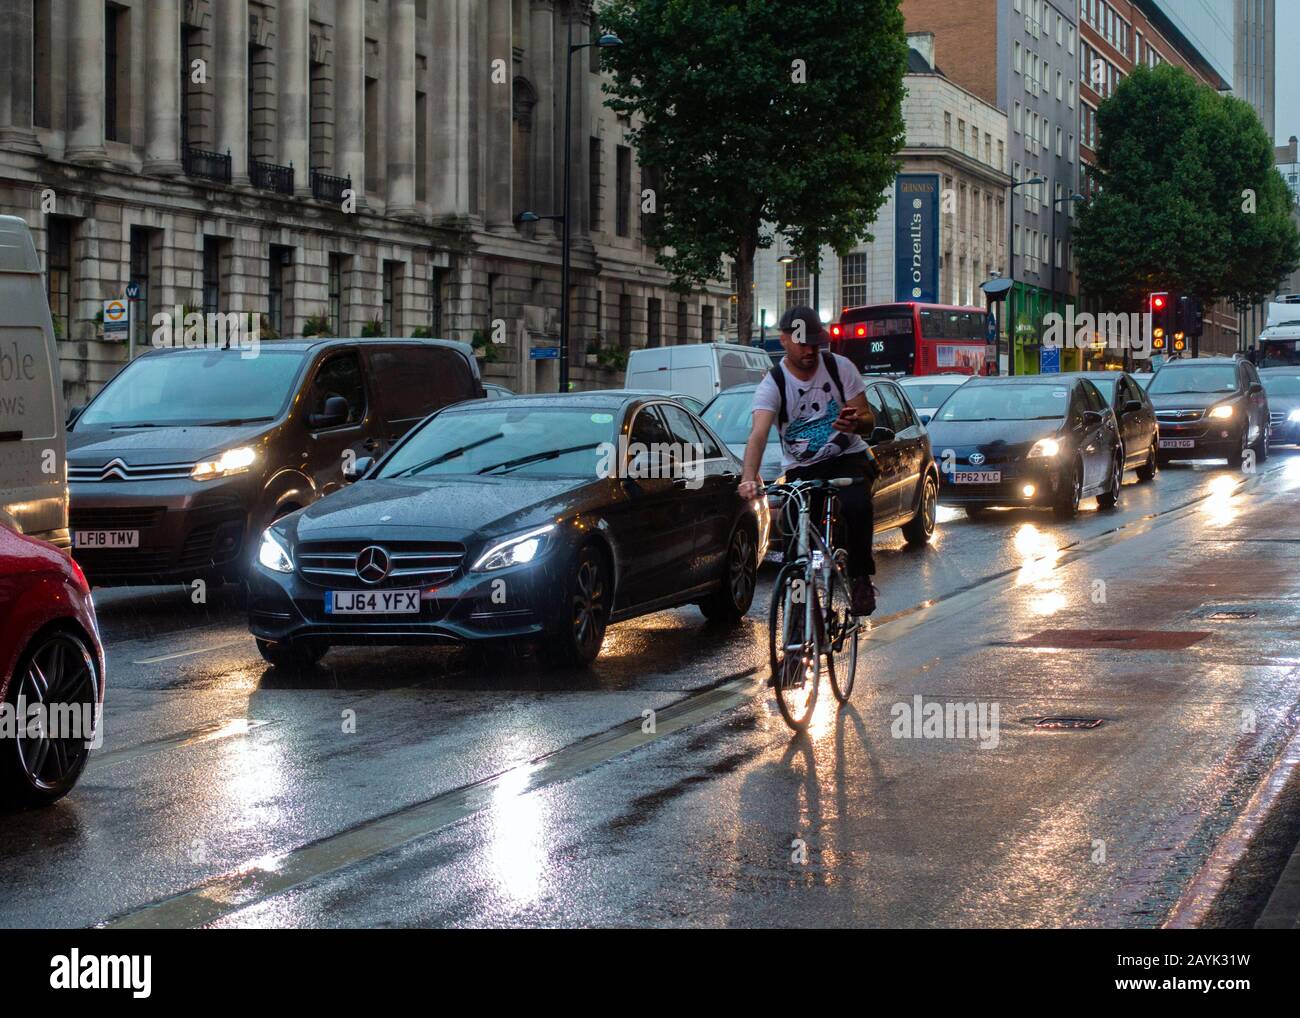 London Traffic,Jam,Euston Road,Raining,Cyclist,on Mobile,No lights,Dusk,London,England Stock Photo